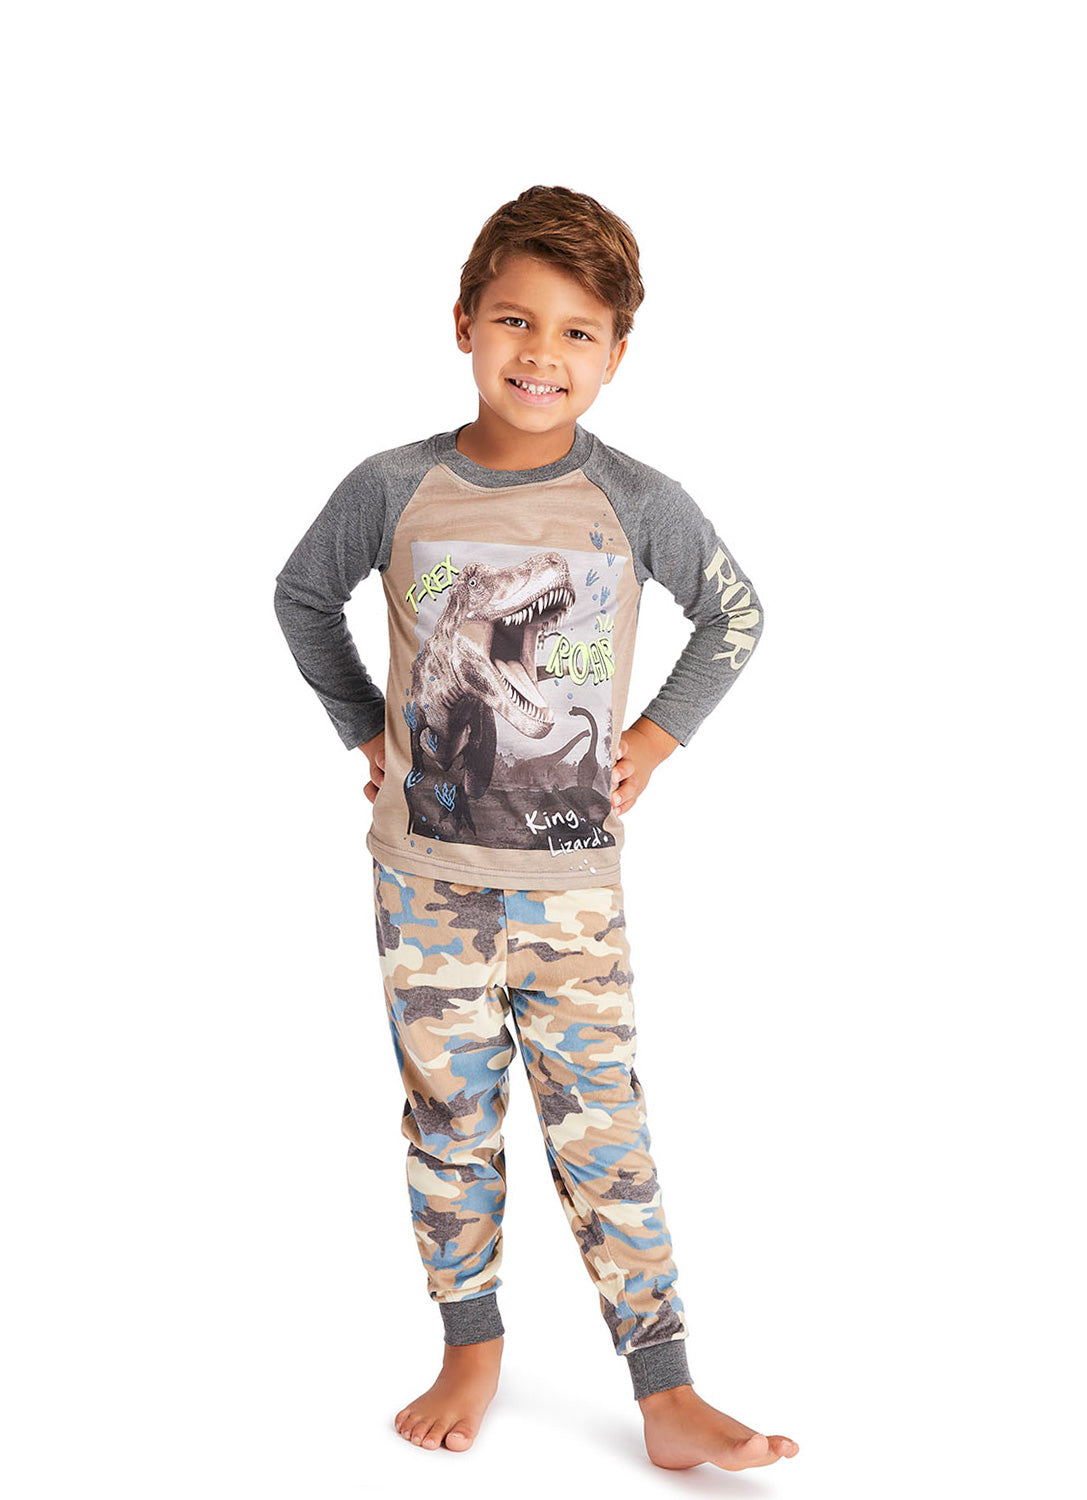 Kid wearing Dino print Pajama Set in Charcoal colour